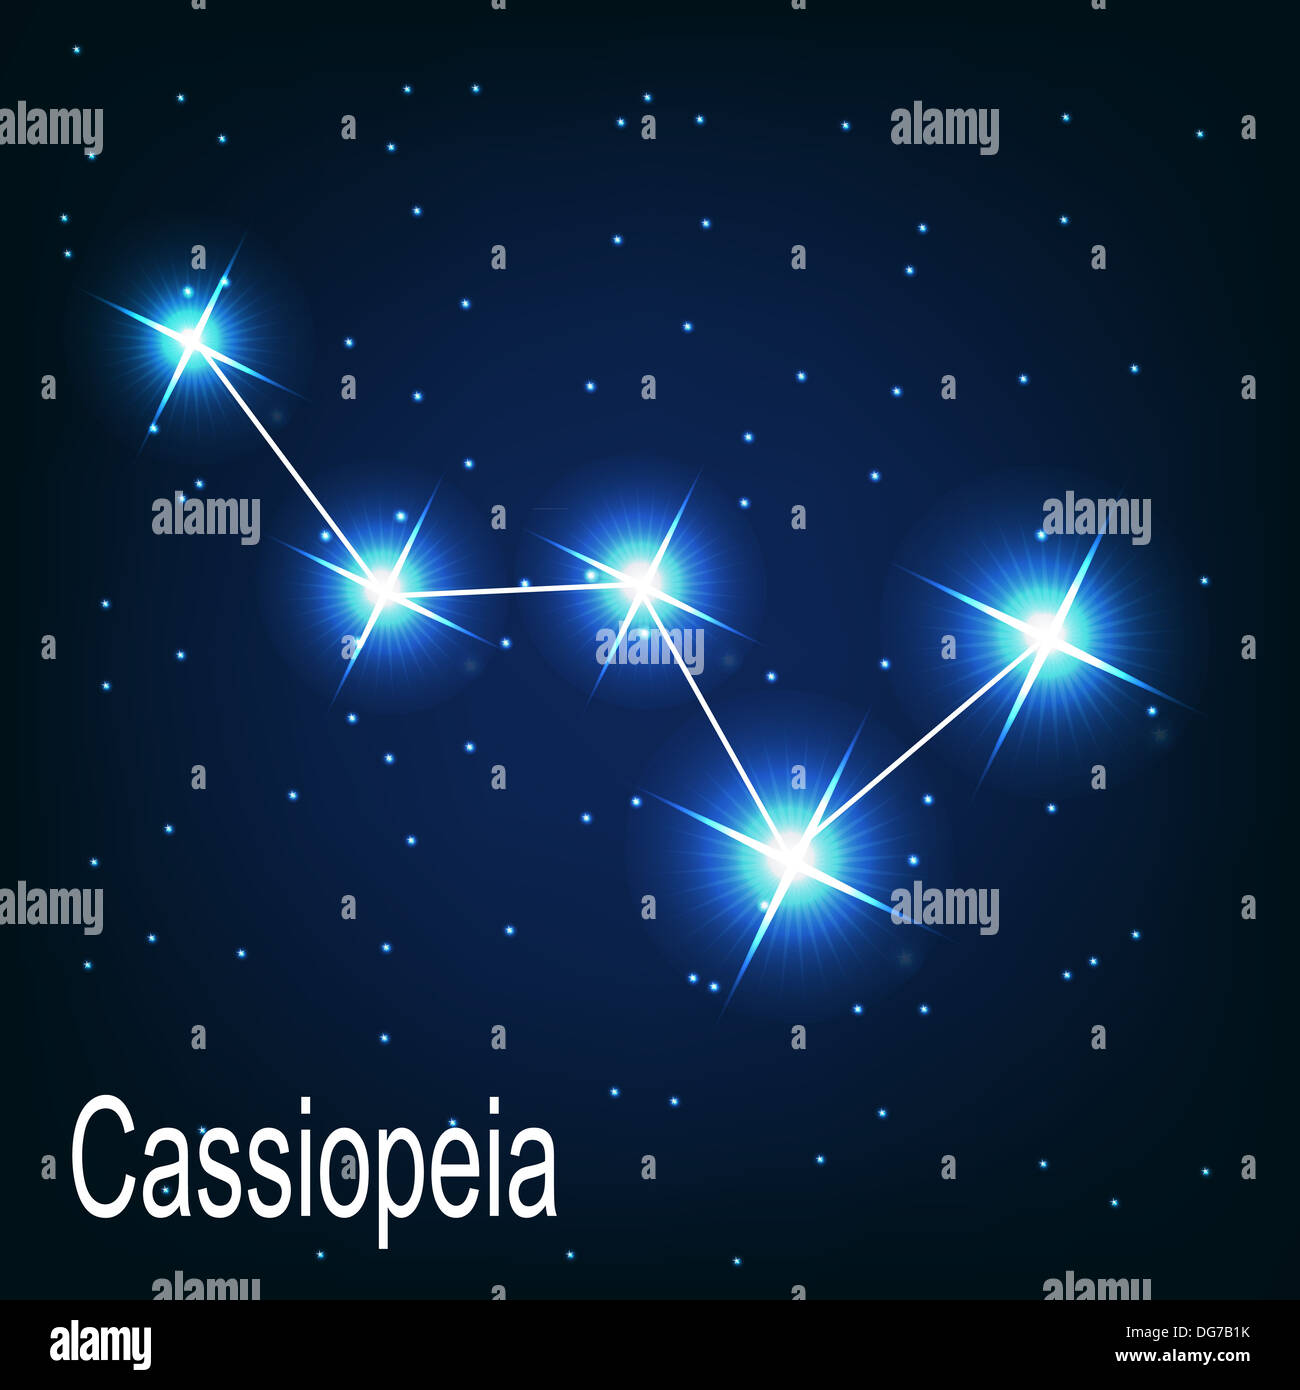 cassiopeia the constellation